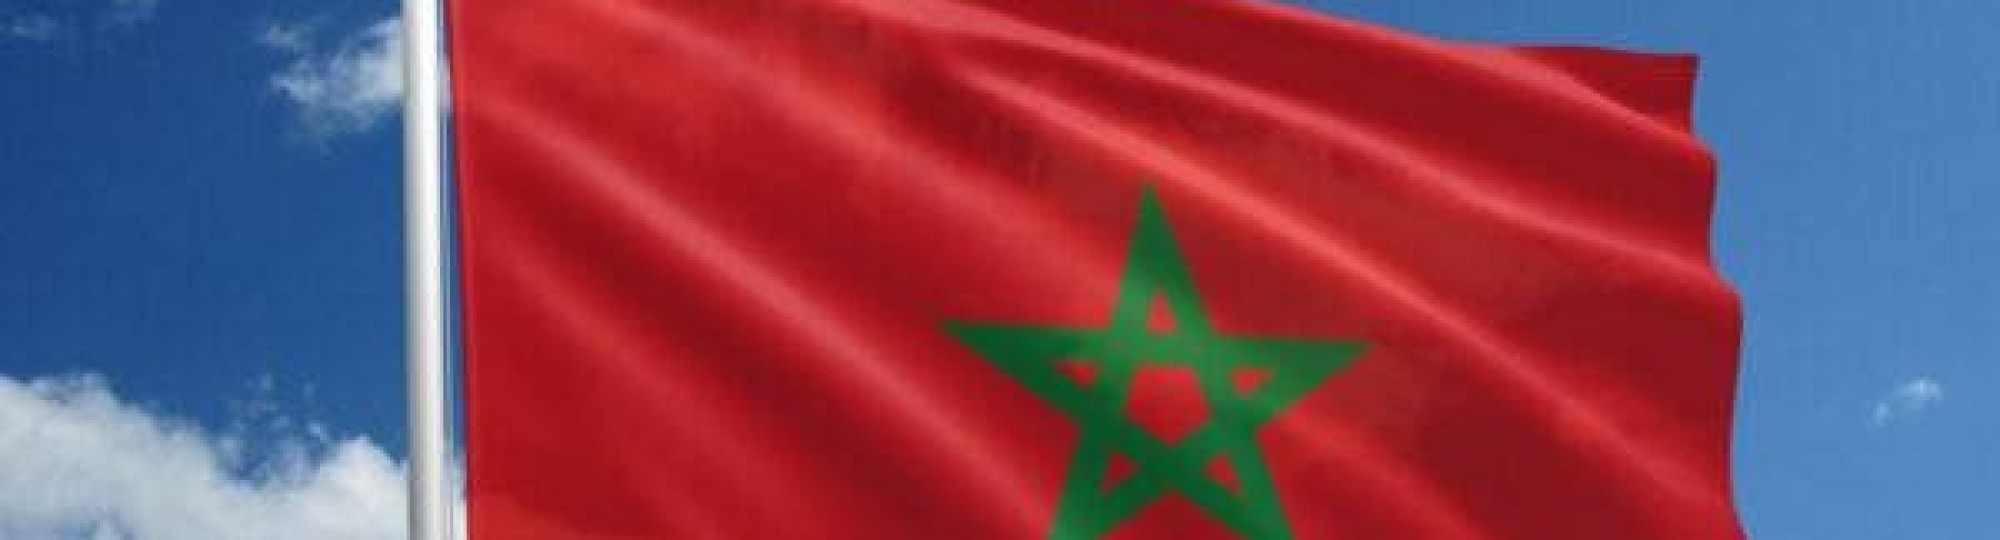 Vlag van Marokka met tekst dat Academie Educatie Marokko ondersteunt